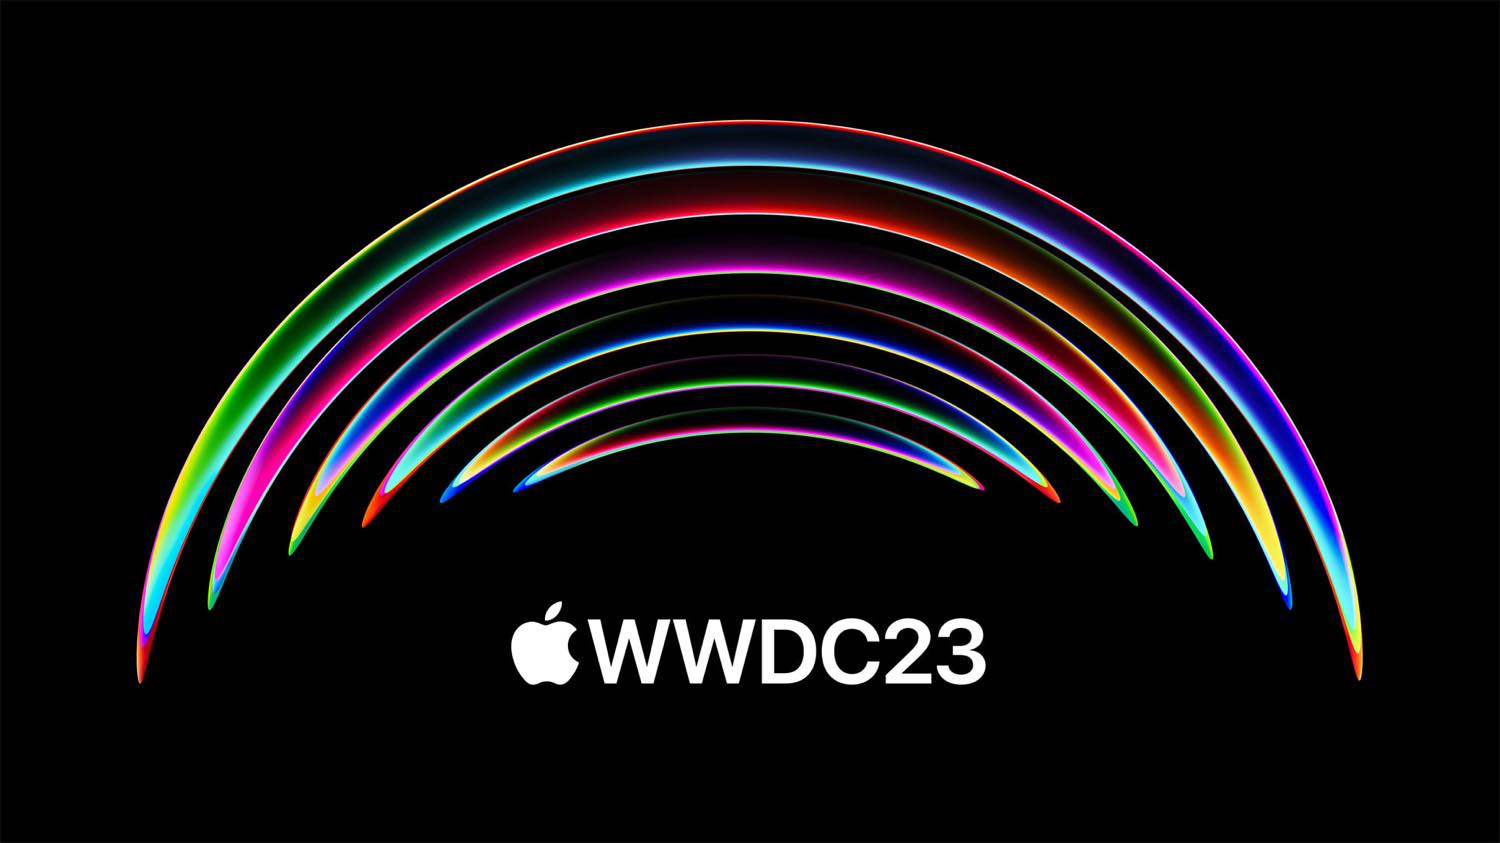 ｢WWDC23｣では｢MacBook Air/Pro 13インチ｣や｢Mac Studio｣の新モデルに関する発表も行われるかも??